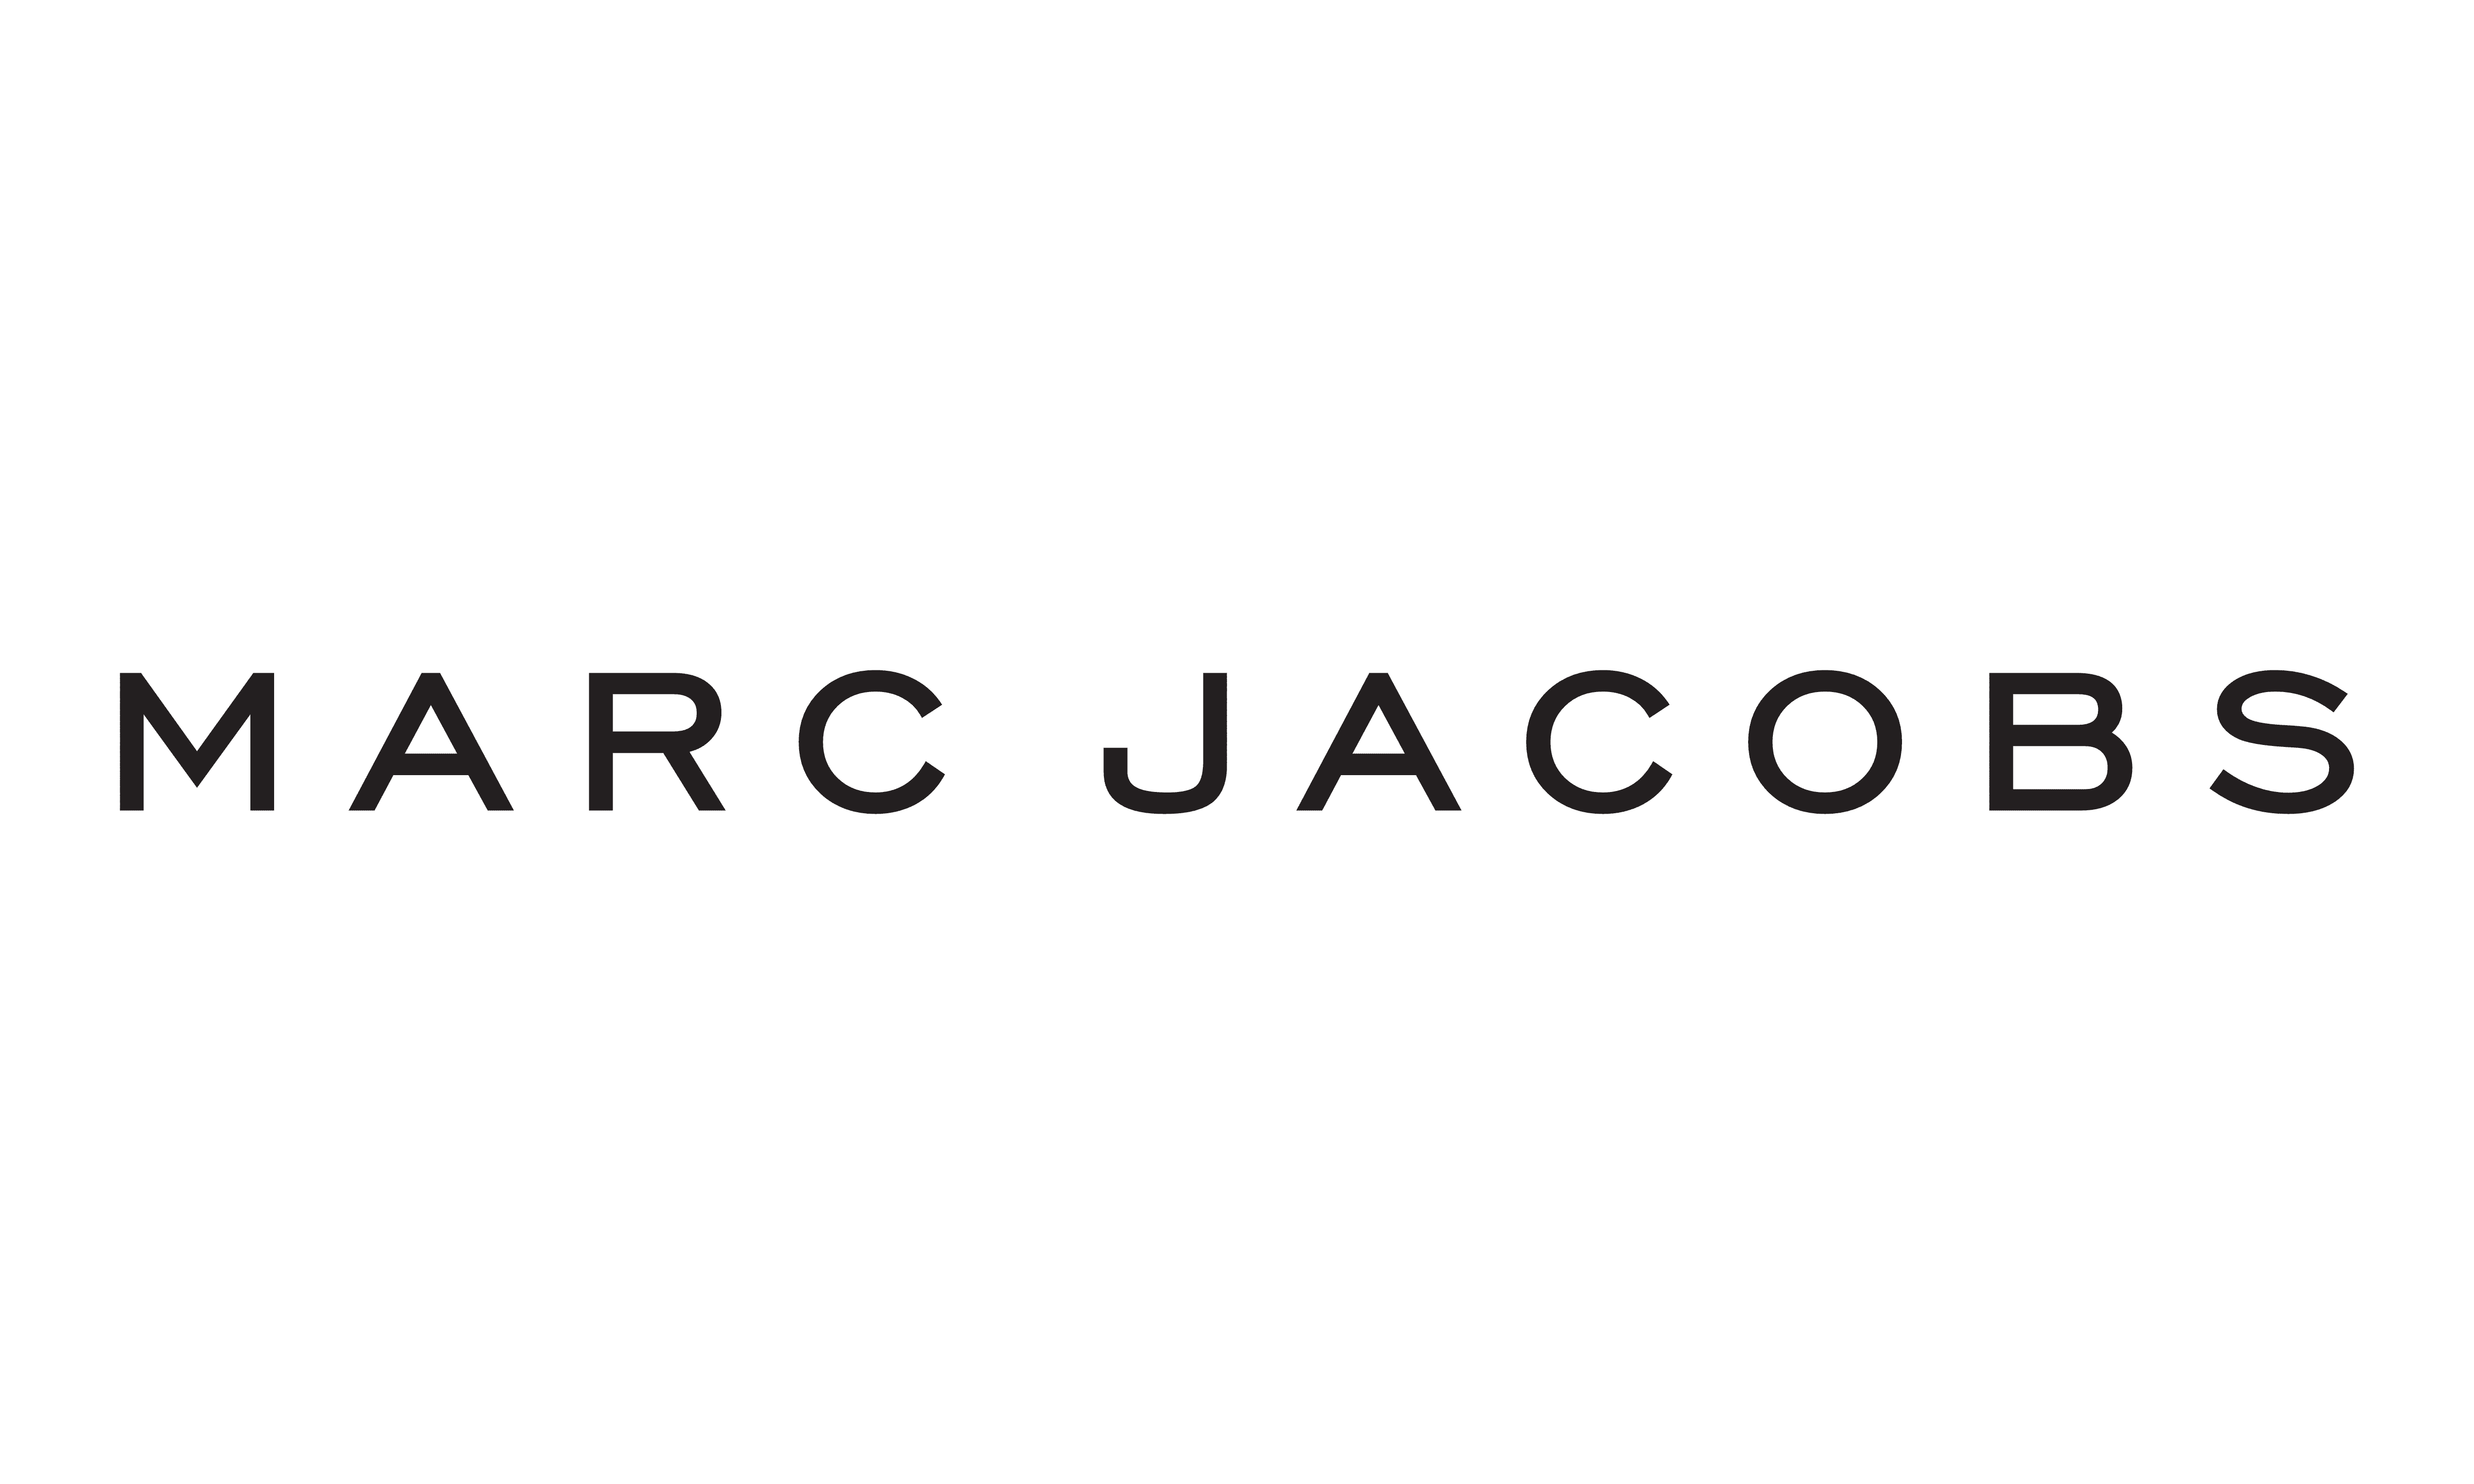 www.2locos.com Marc Jacobs logo  Marc jacobs, Marc jacobs logo